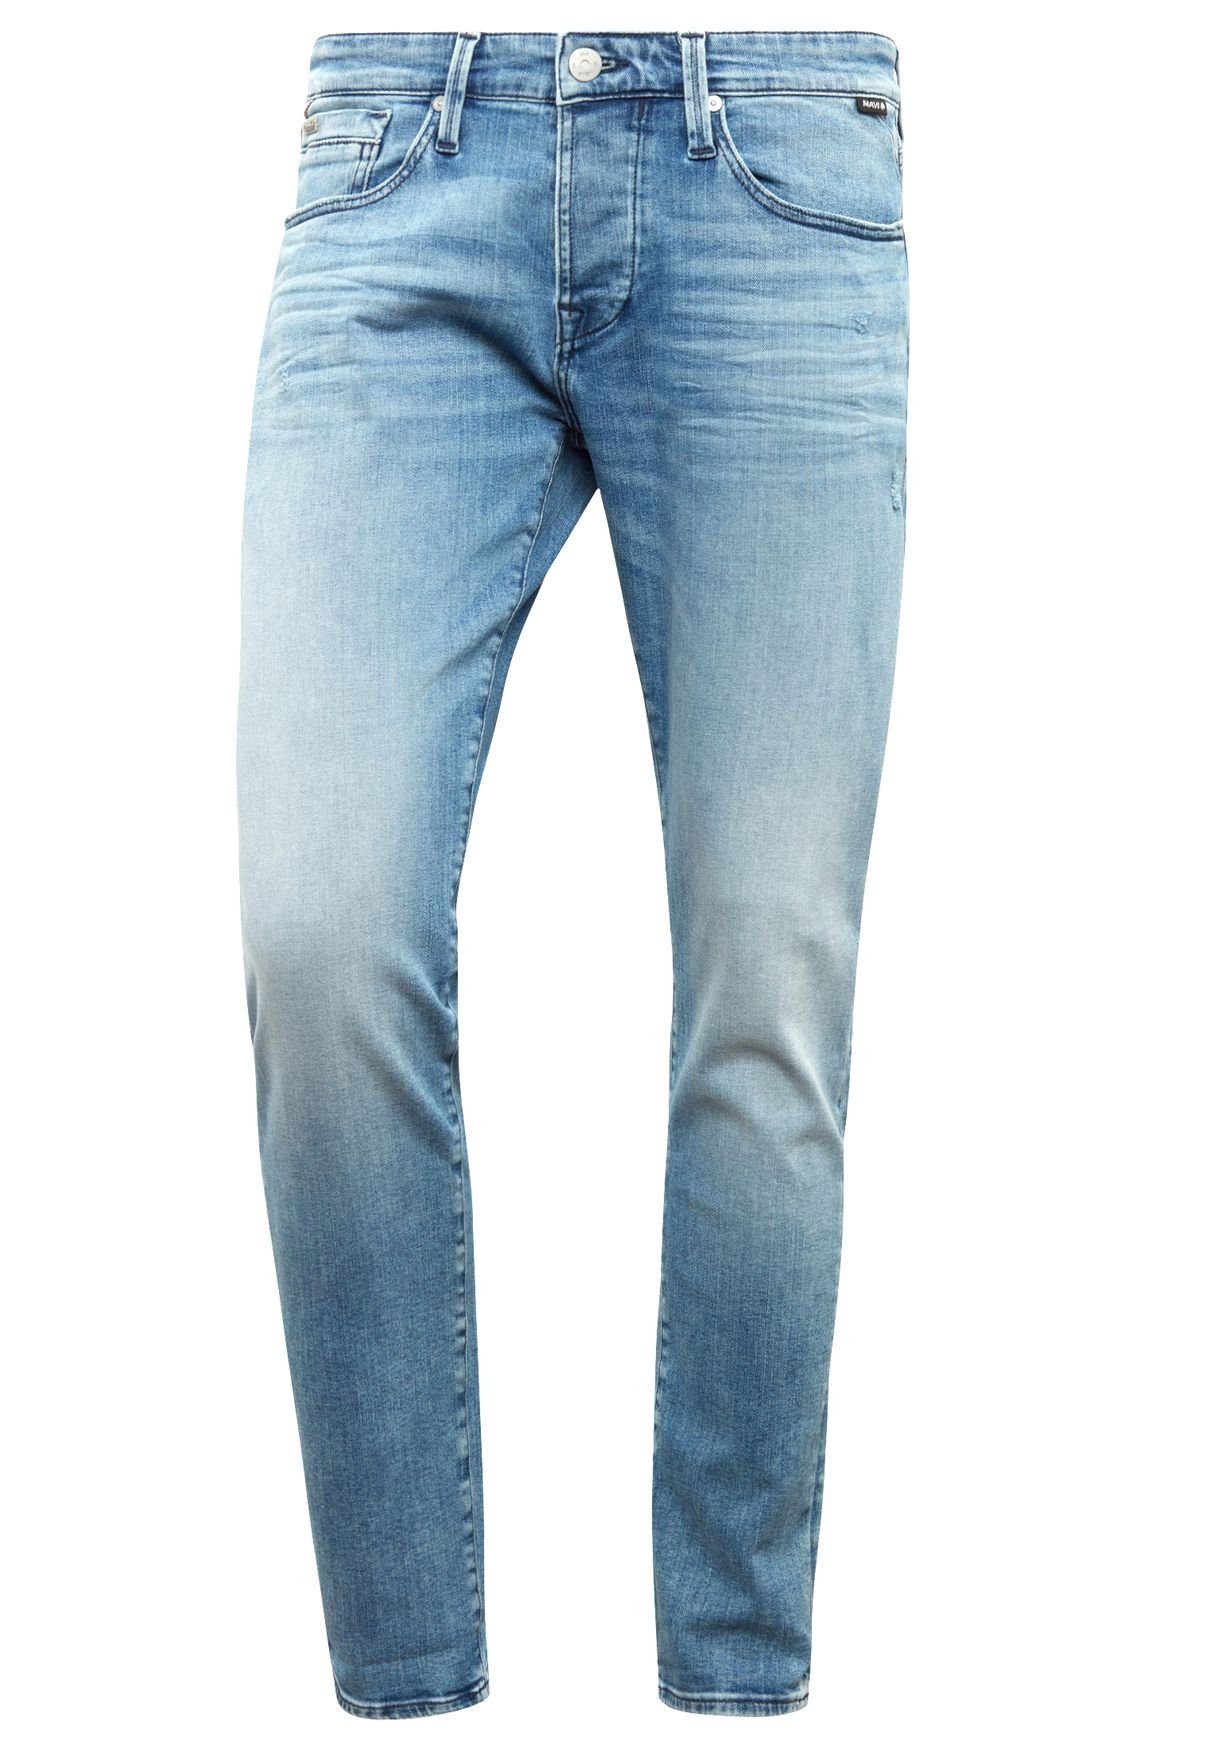 Mavi Slim YVES Fit in Hose Jeans Slim-fit-Jeans 4176 Blau Denim